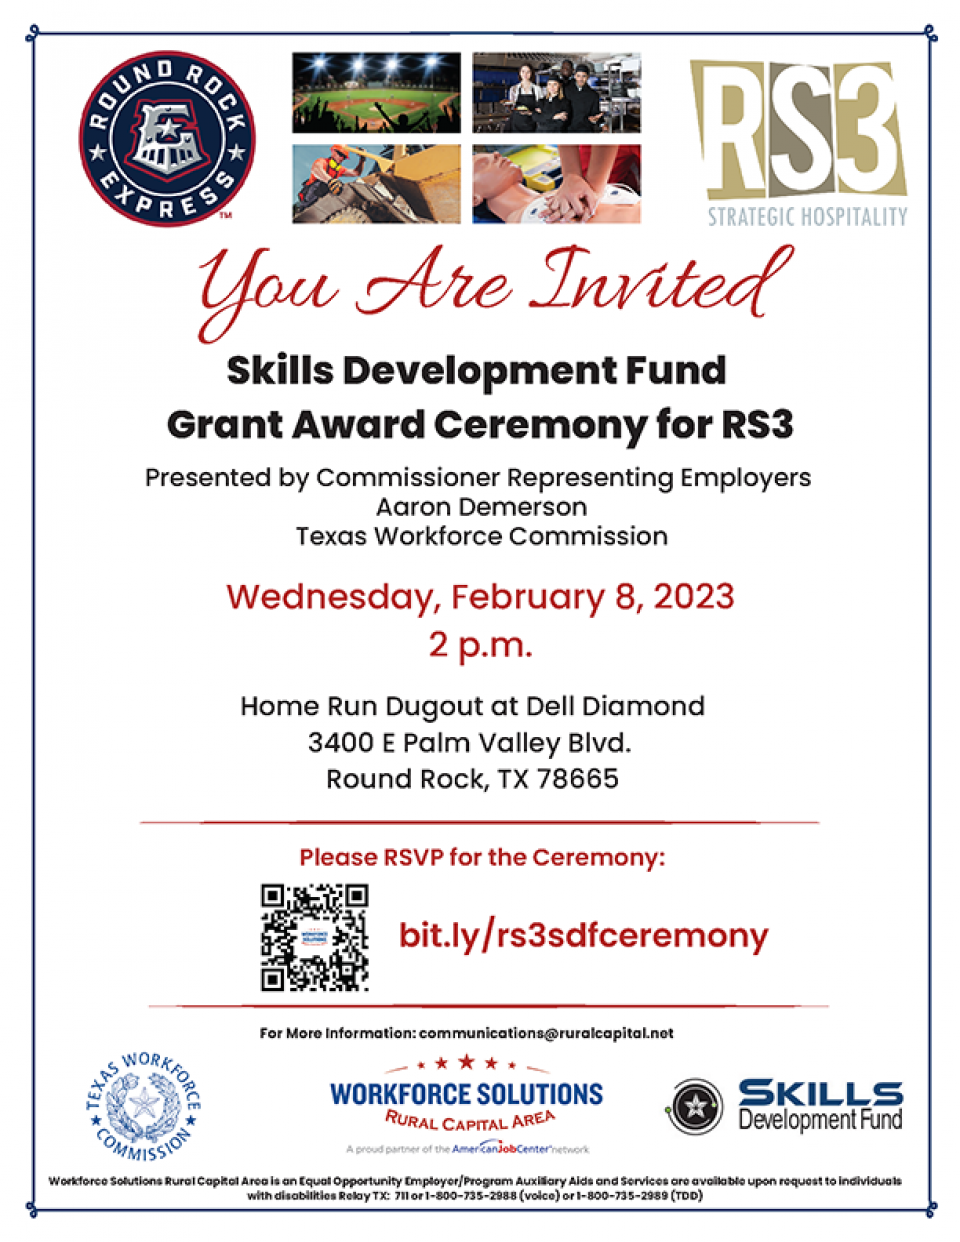 WSRCA to Host Skills Development Fund Grant Award Ceremony for RS3